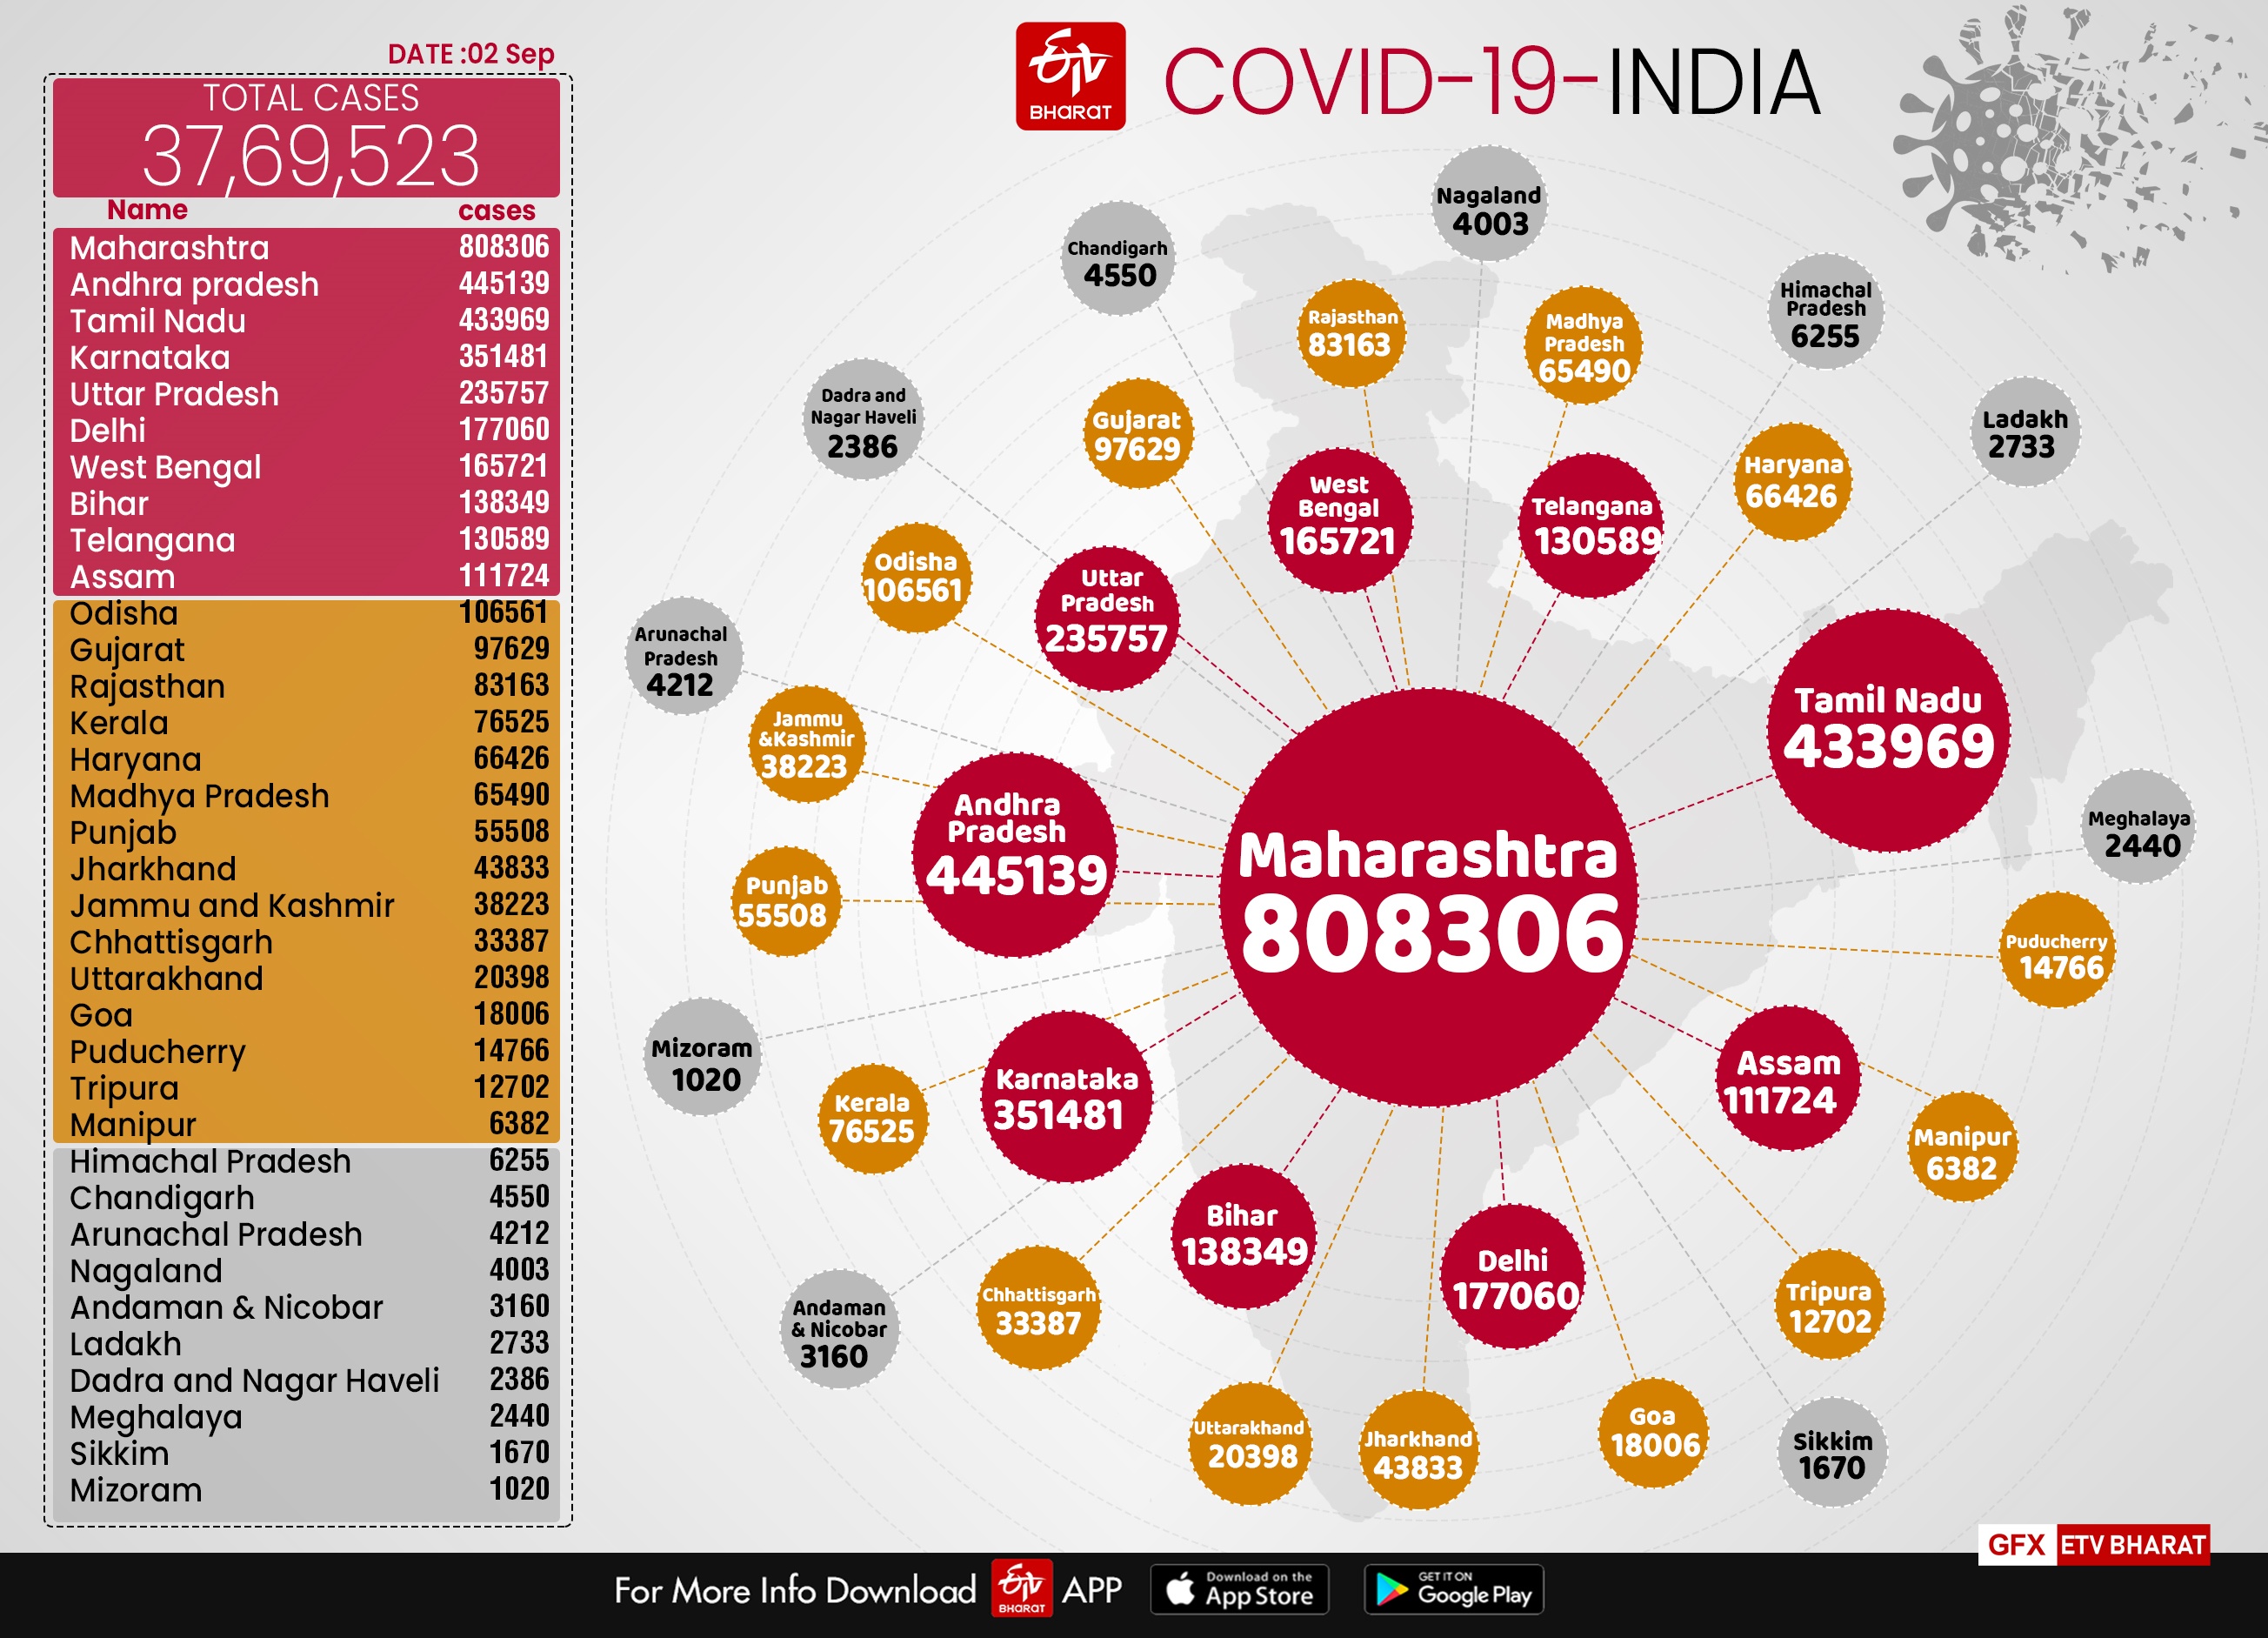 9,860 new COVID-19 cases, 113 deaths in Karnataka